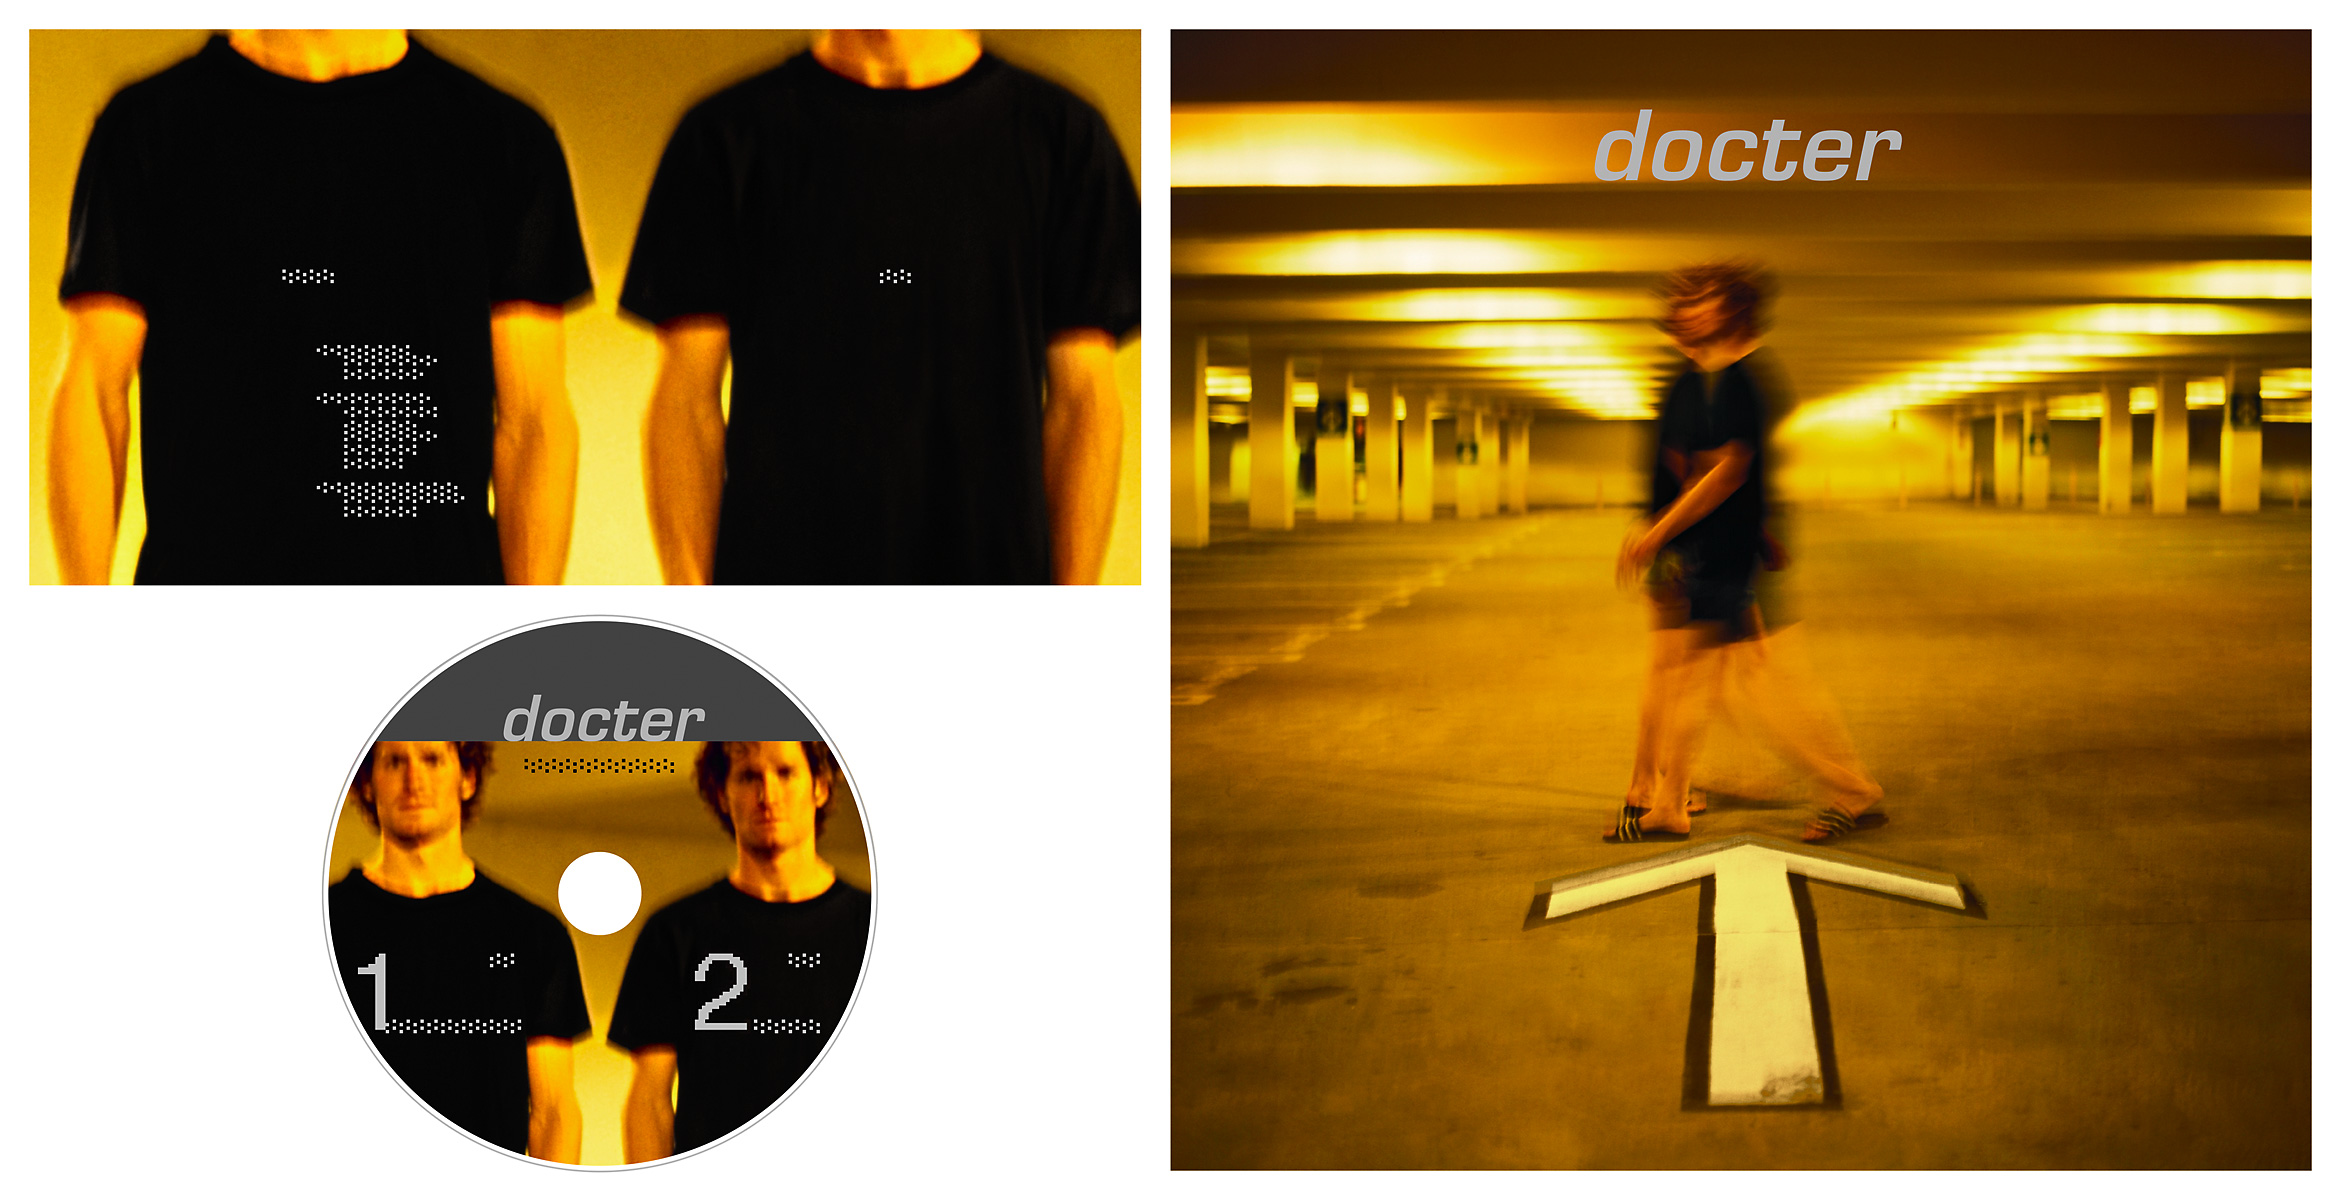 cd-layout-docter-border-stephen-austin-welch-director-photographer